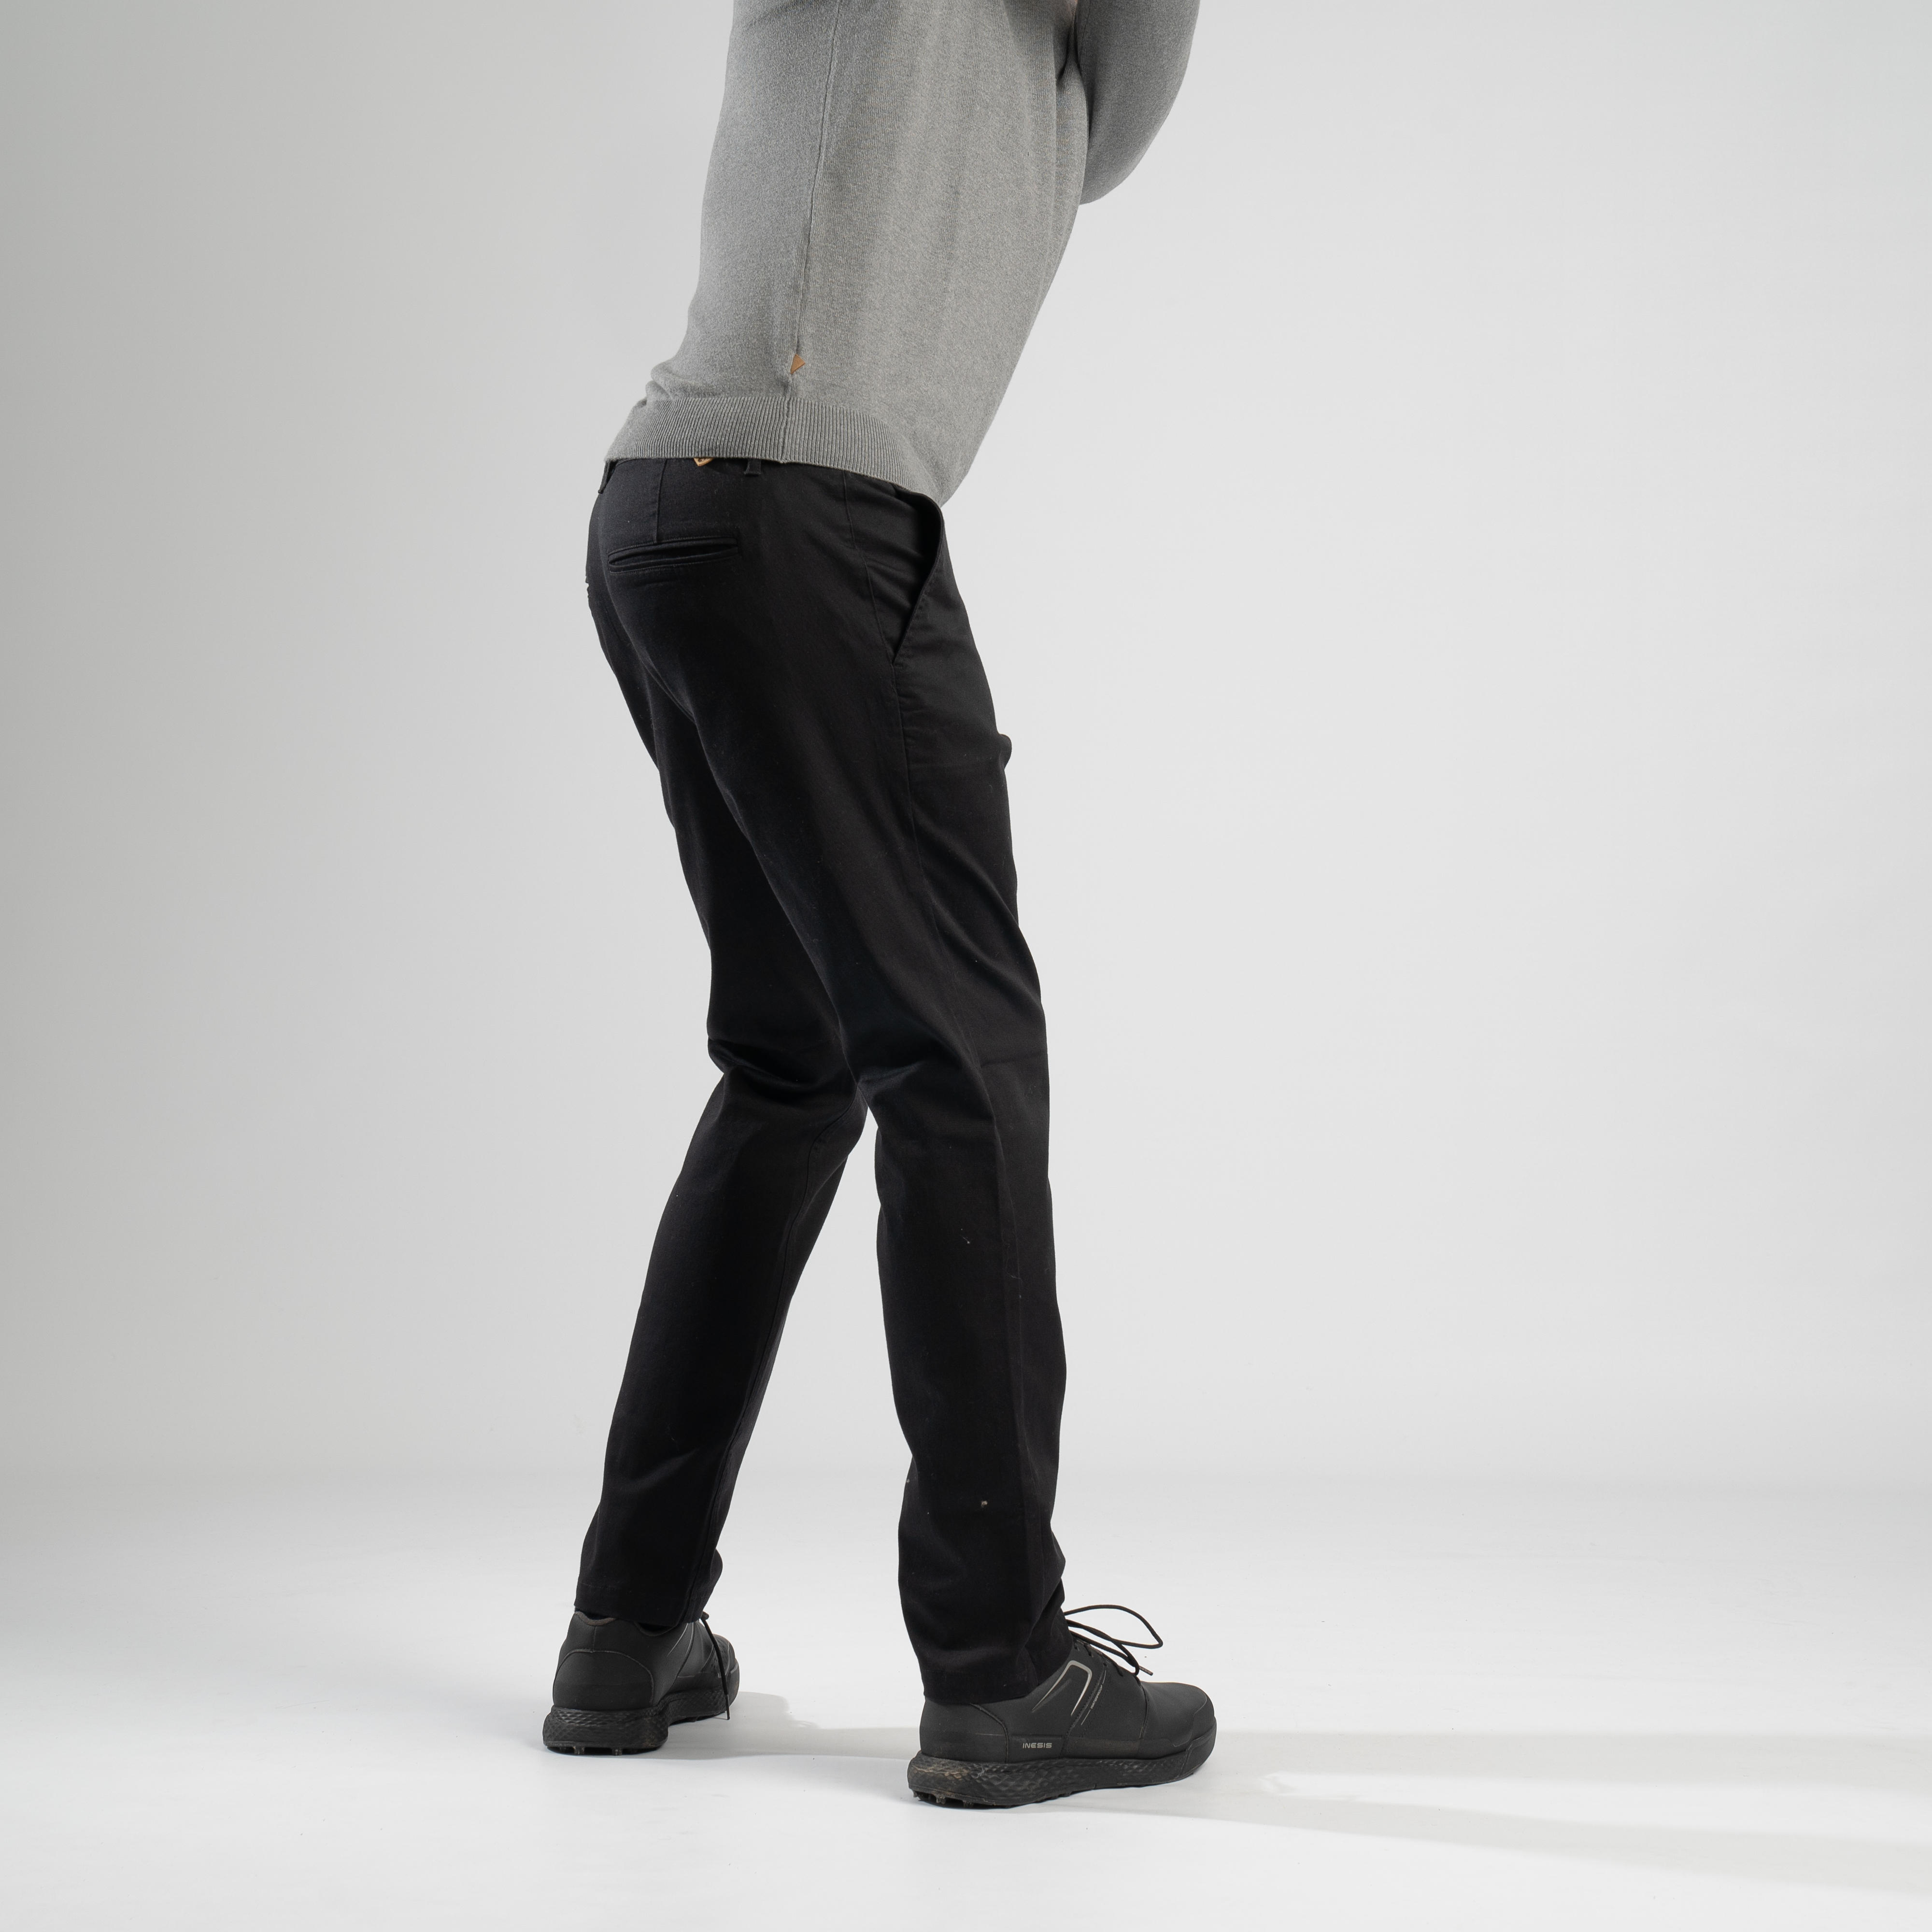 Inesis Mens Golf Trousers Bottoms Pants Four Pockets Design Mw500 Grey |  eBay